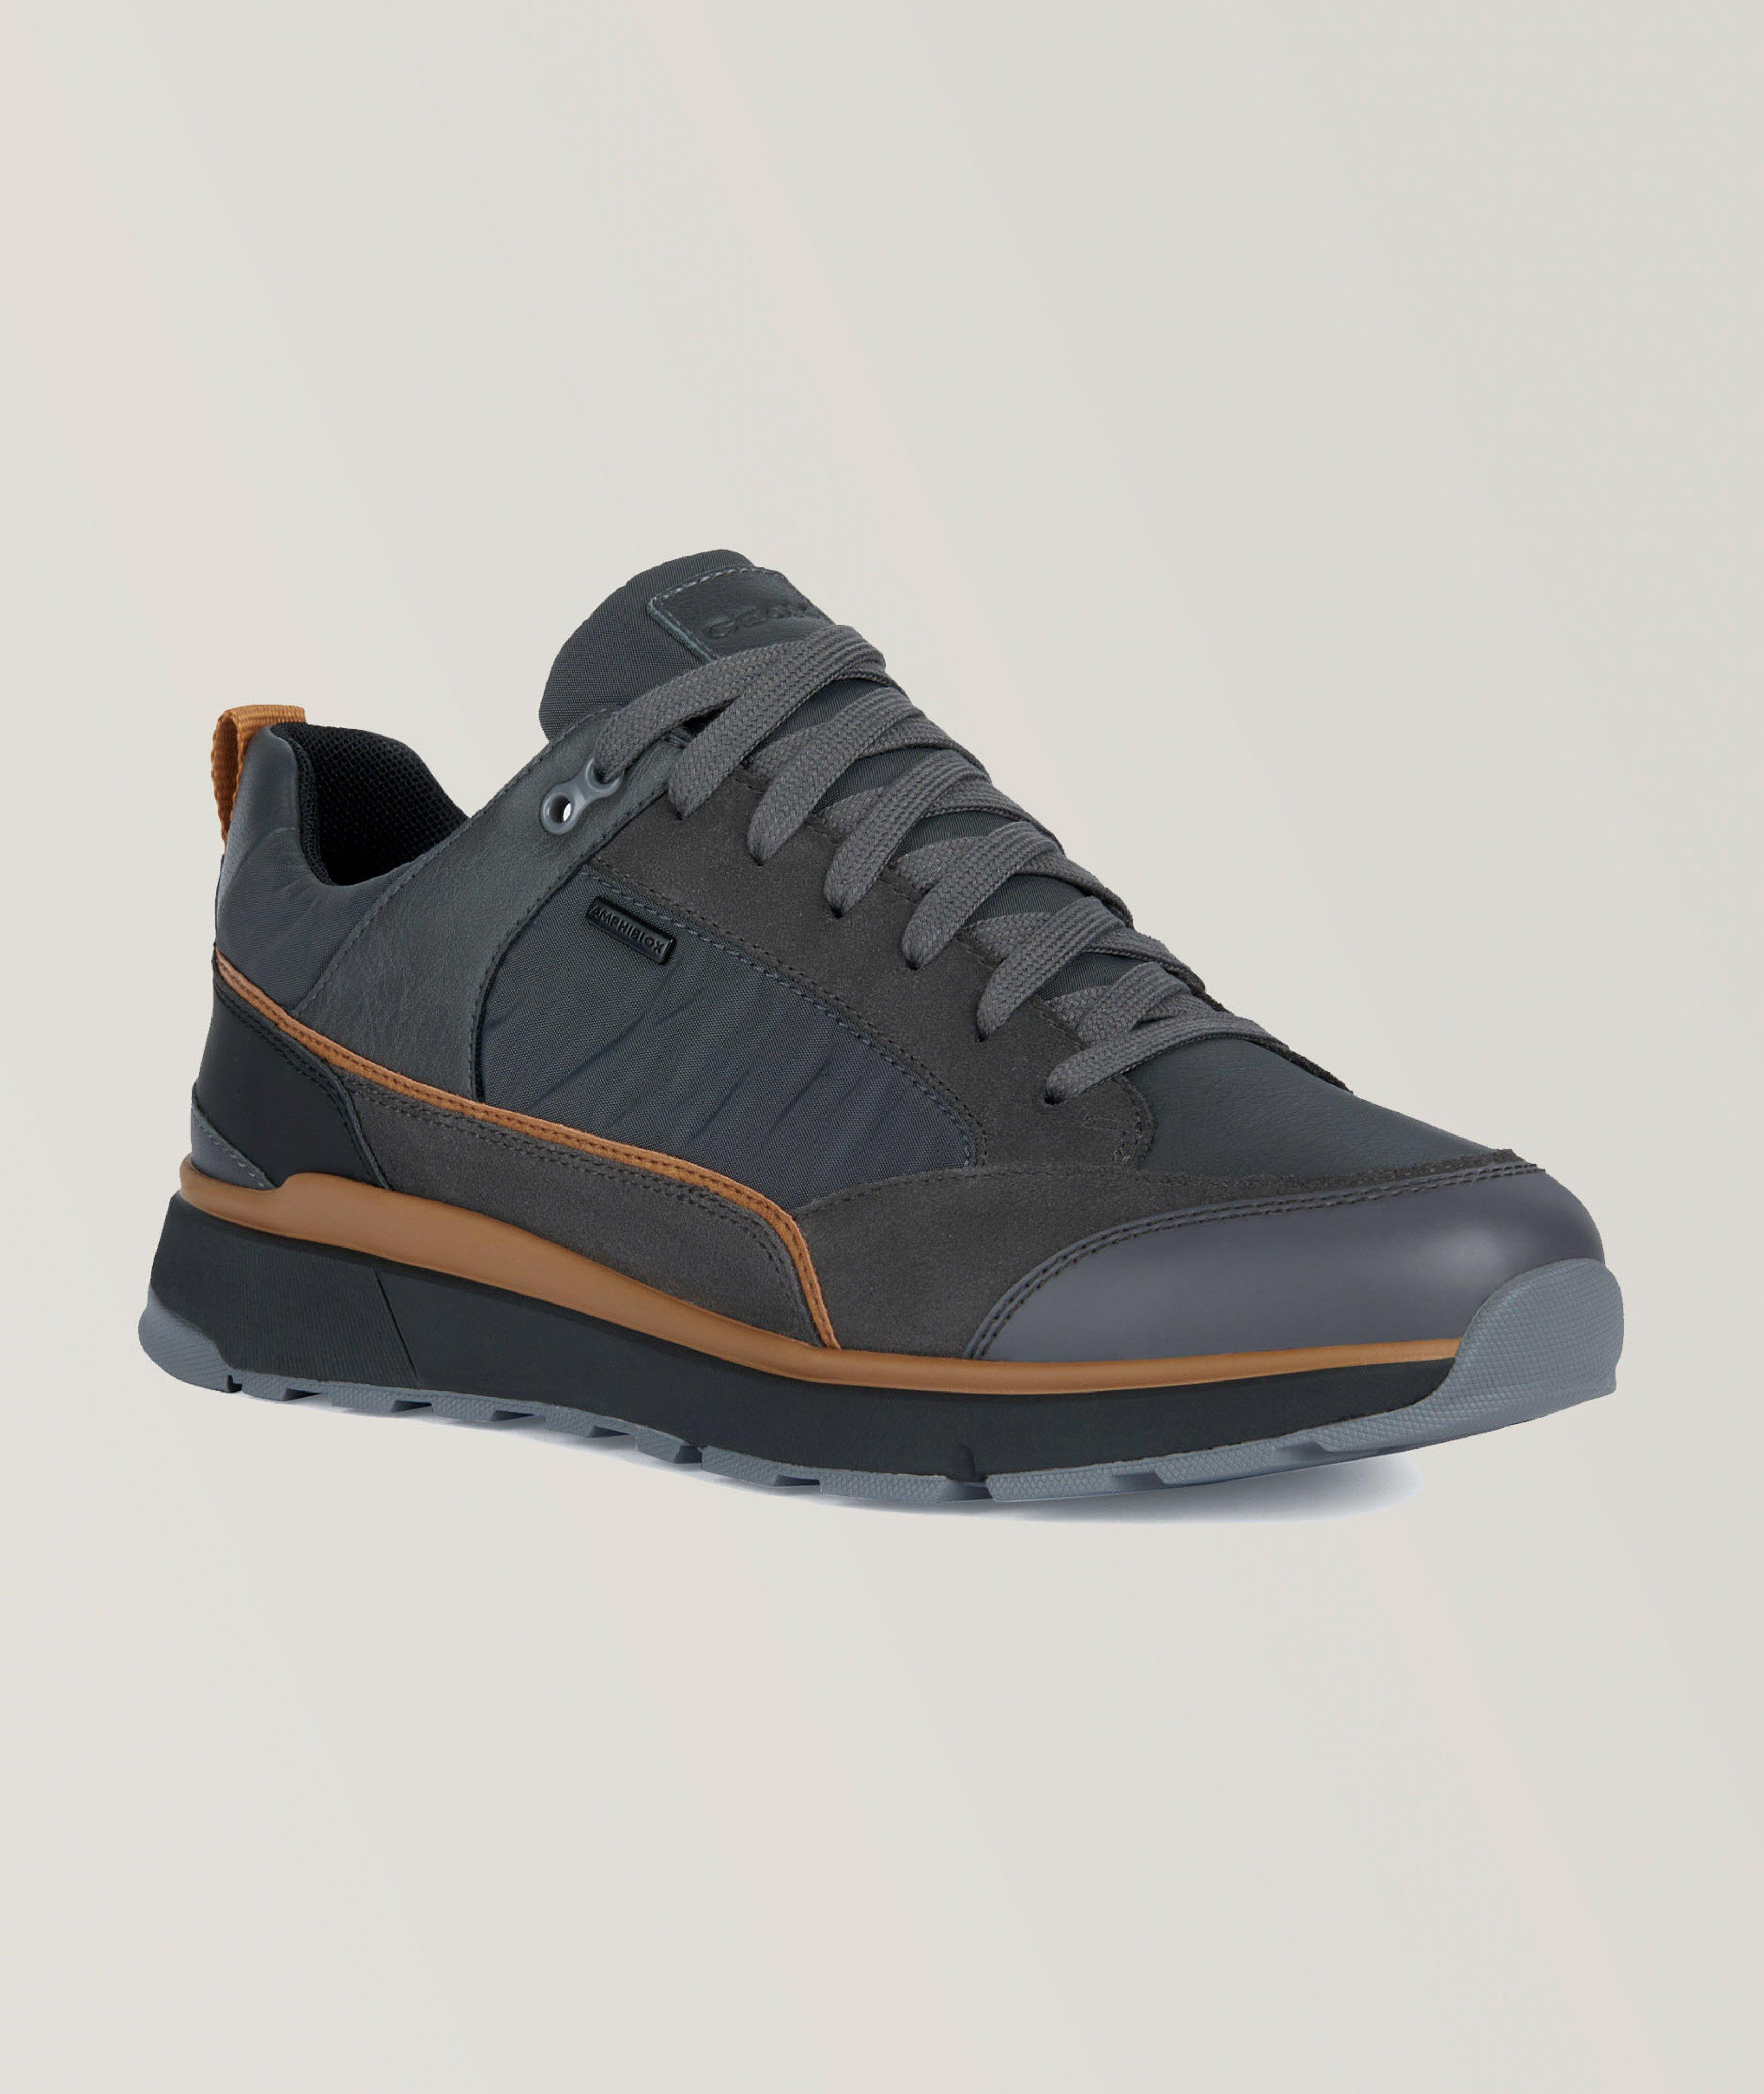 Chaussure sport Dolomia à technologie Amphibiox image 0